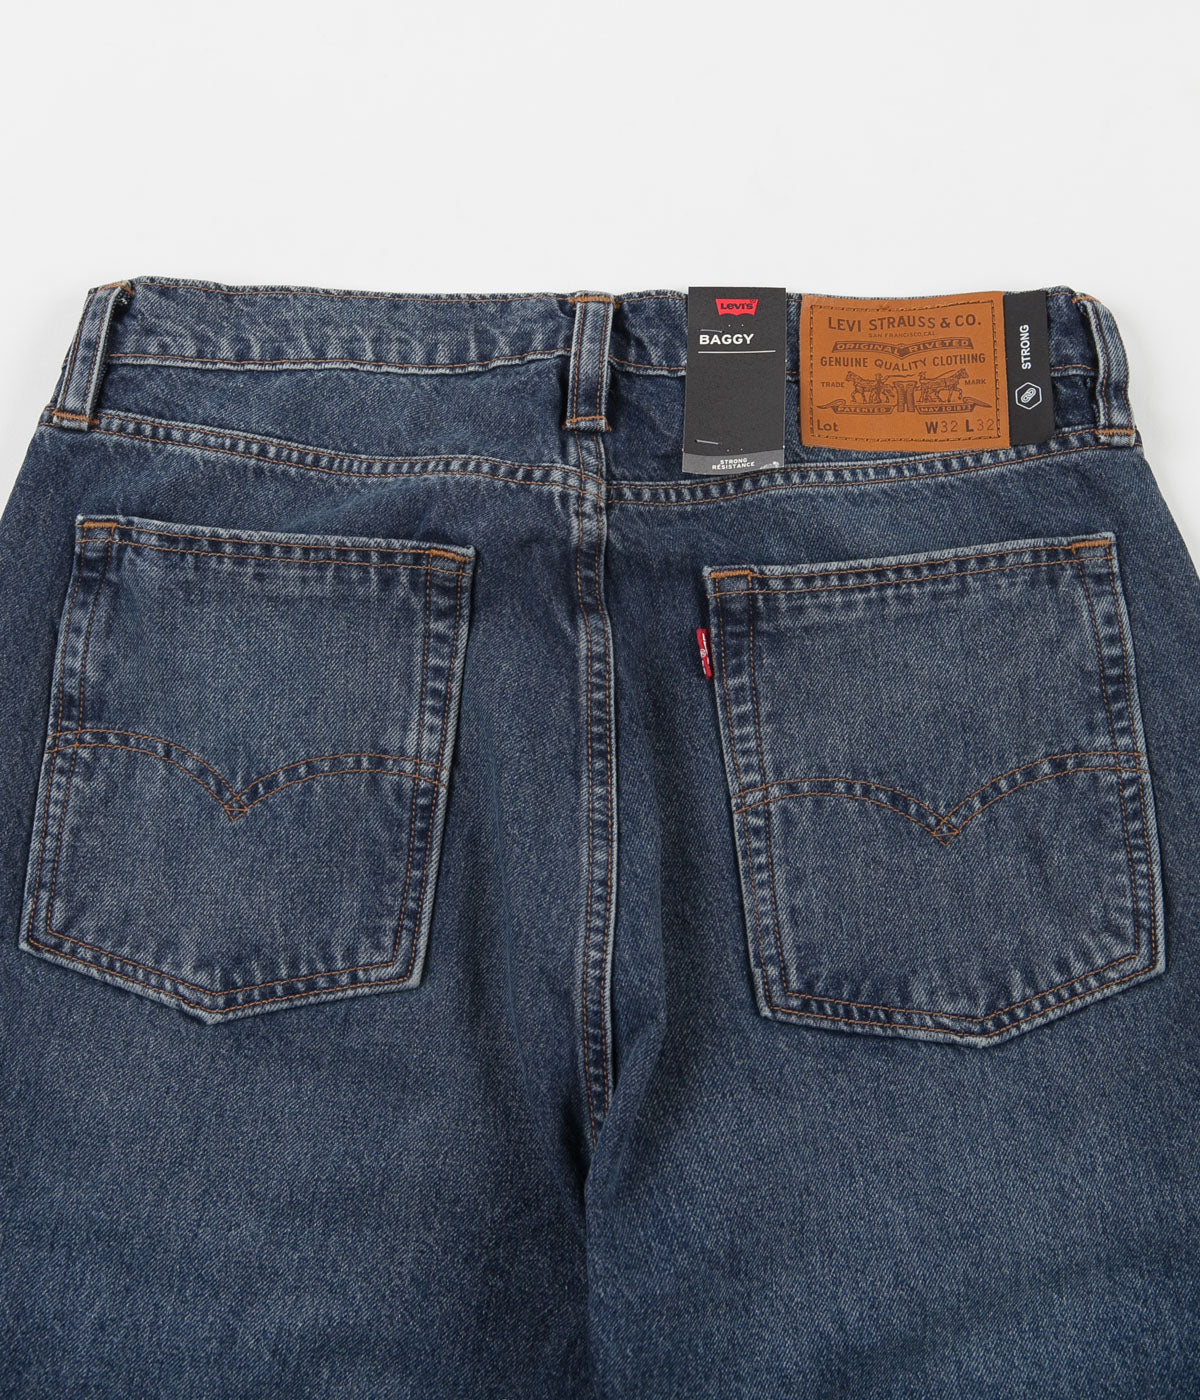 Levi'så¨ Skate Baggy 5 Pocket Trousers - Bush | Flatspot